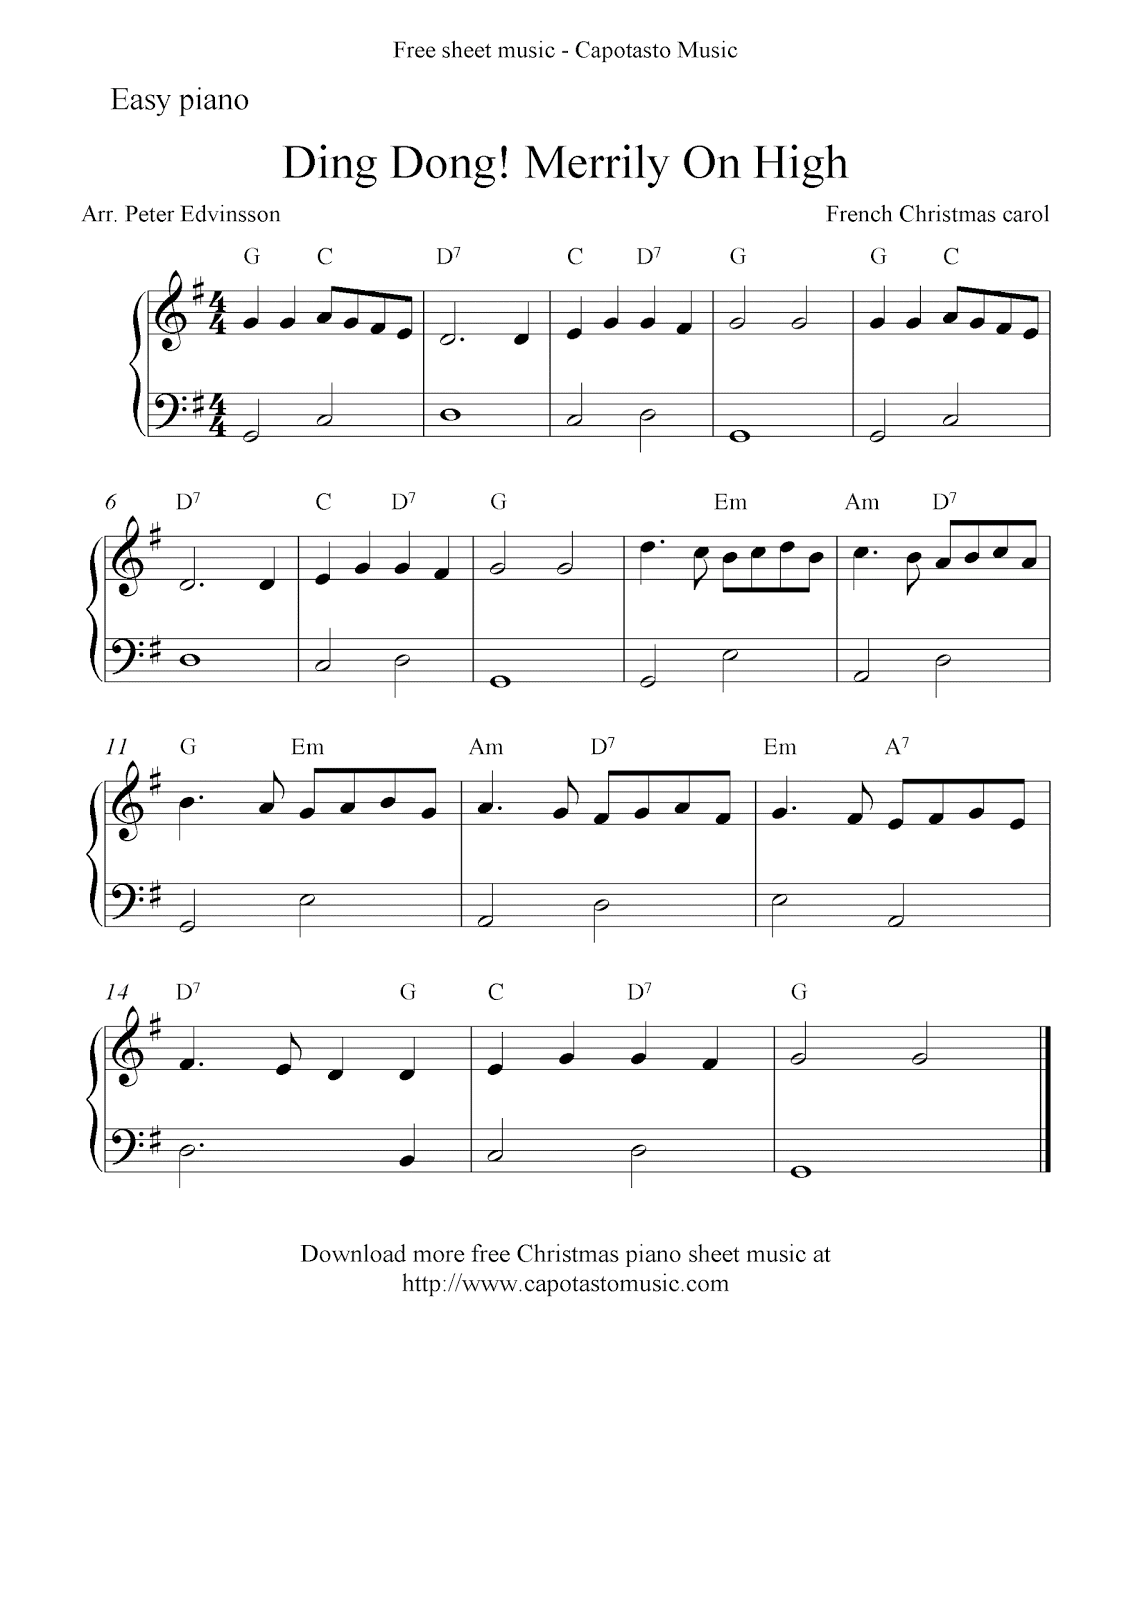 free-printable-sheet-music-free-christmas-sheet-music-for-easy-piano